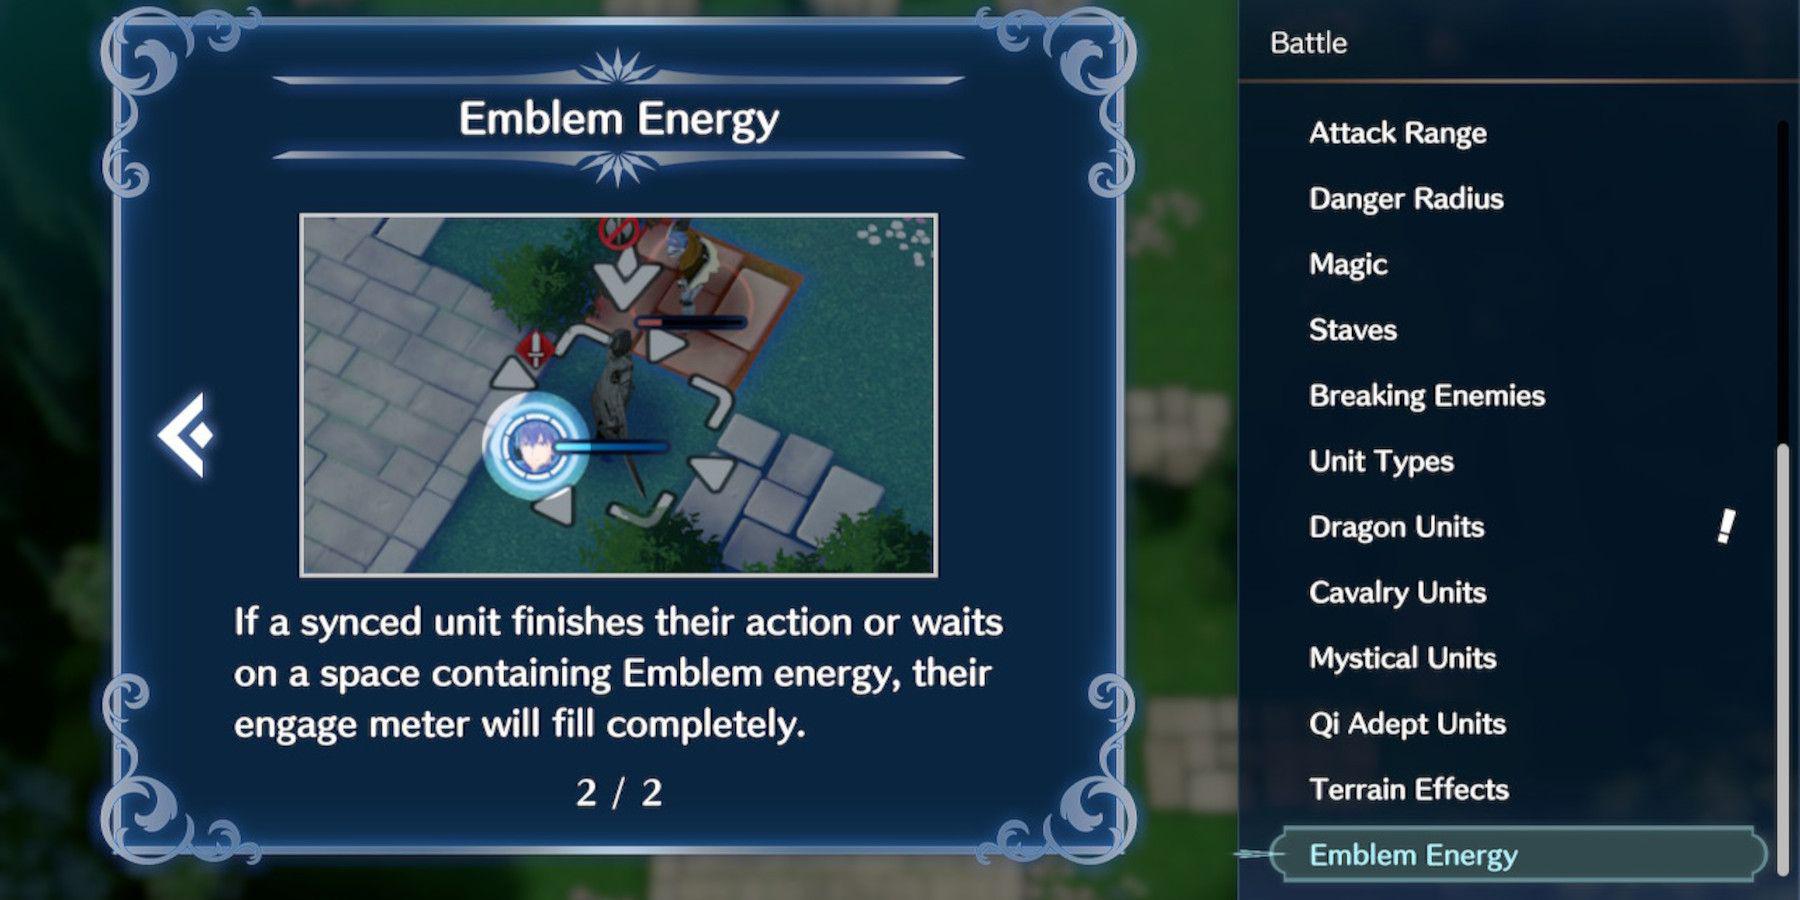 Fire Emblem Engage: Capítulo 2 (Queen Lumera) Passo a passo